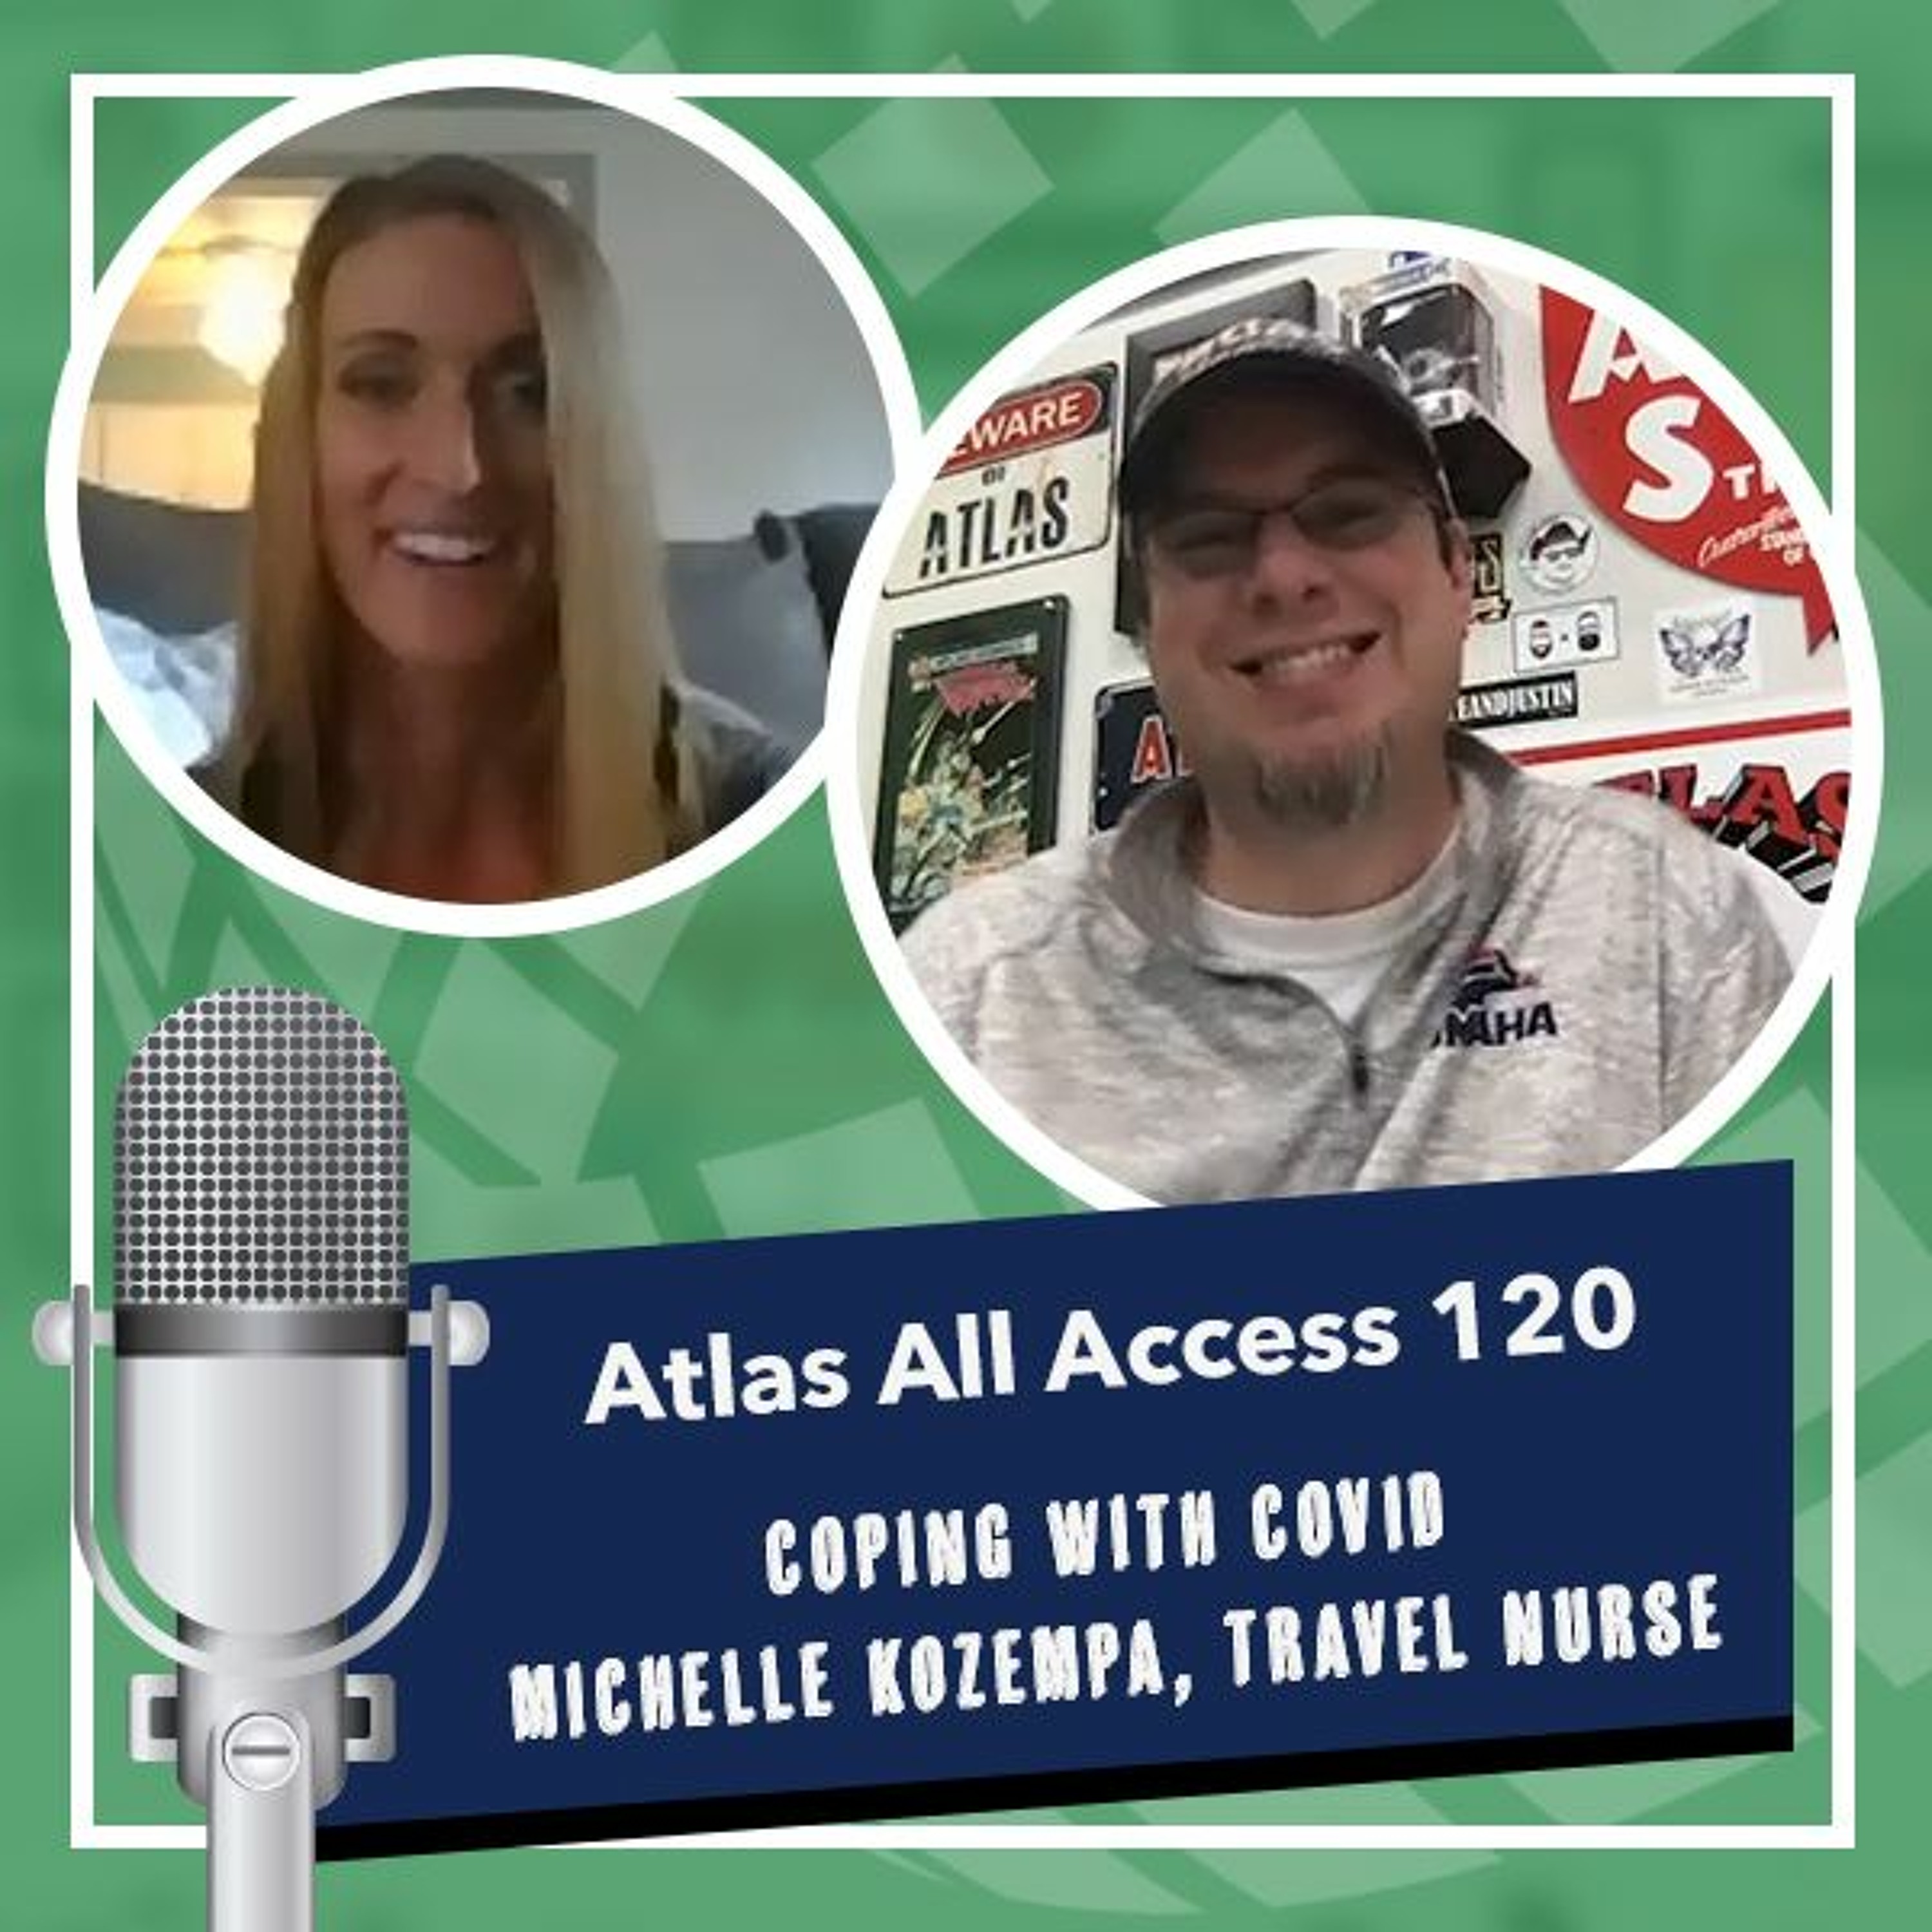 Coping with COVID | Travel ICU Nurse Michelle Kozempa - Atlas All Access 120